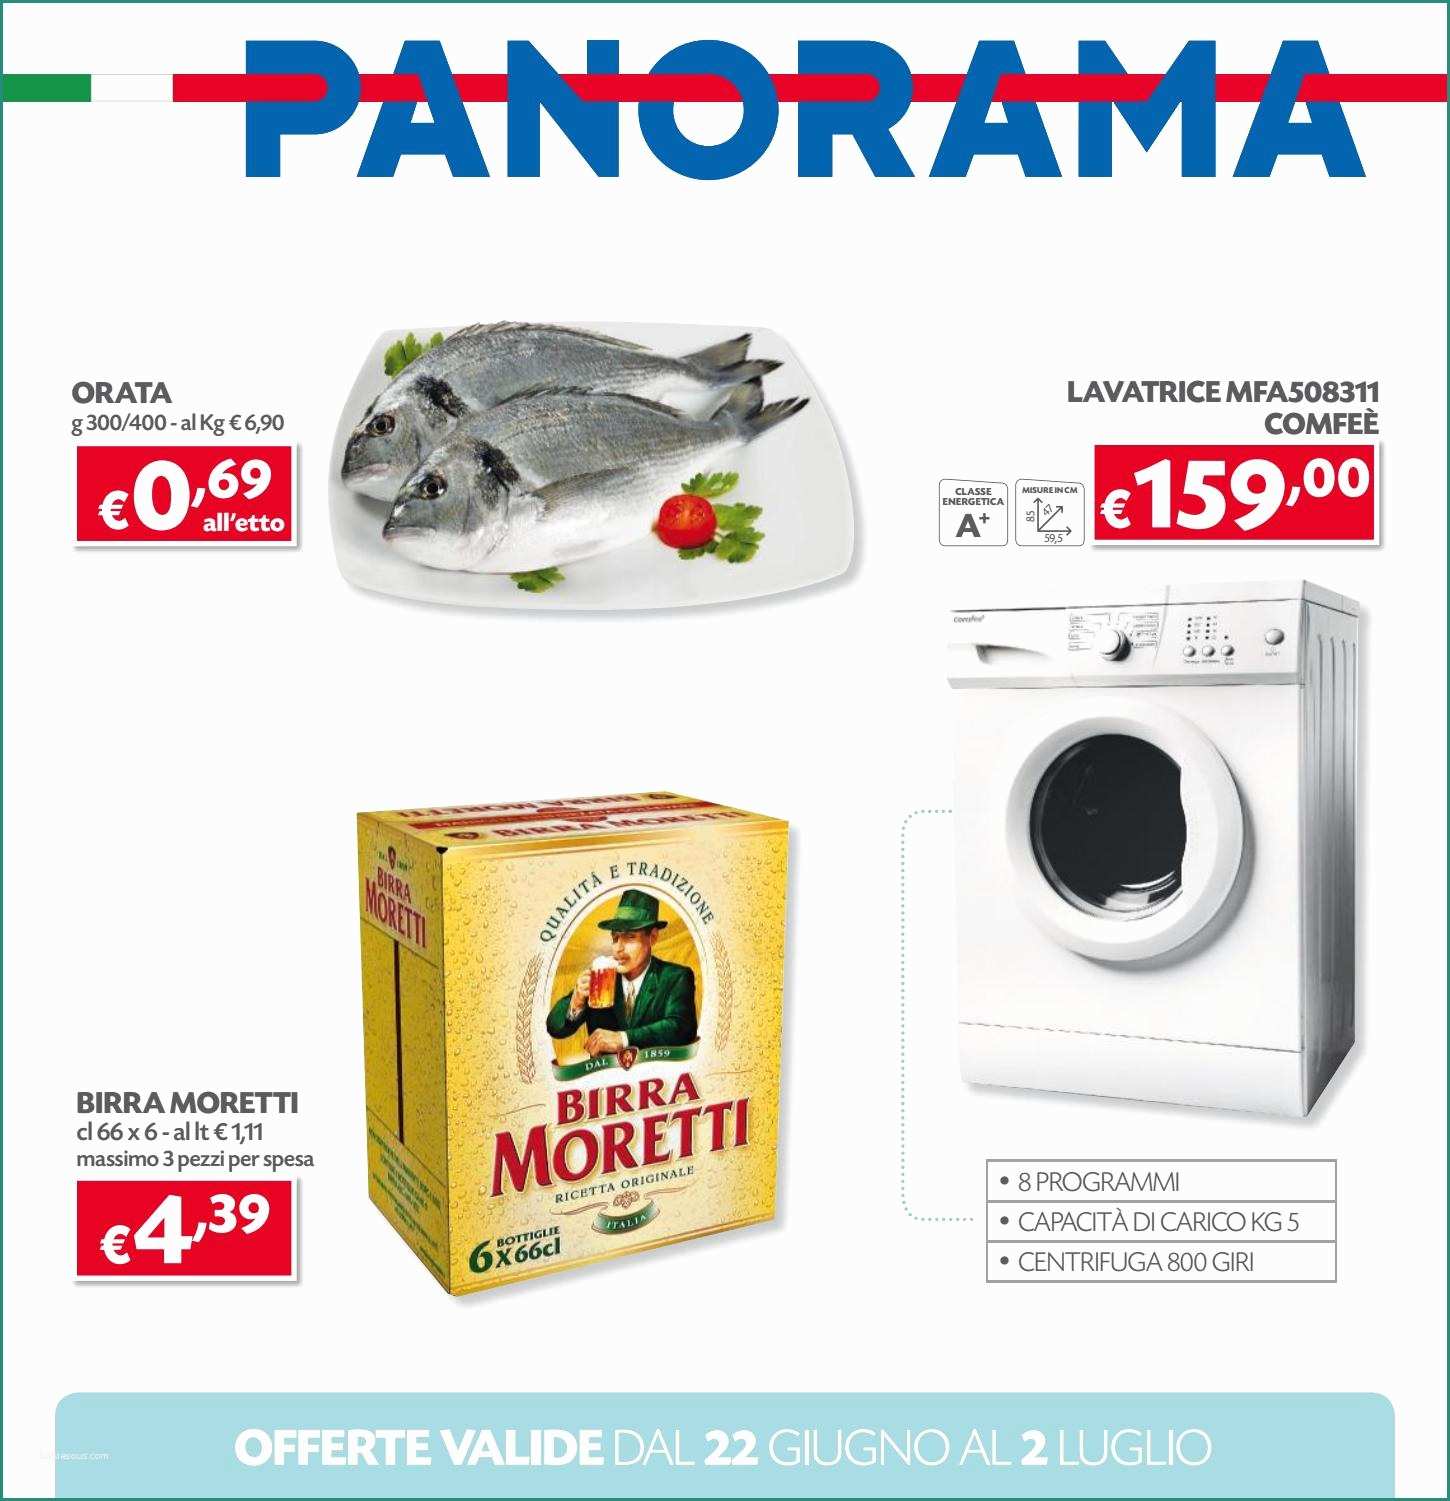 Lavatrice Non Prende Ammorbidente E Panorama 2lug2 by Best Of Volantinoweb issuu